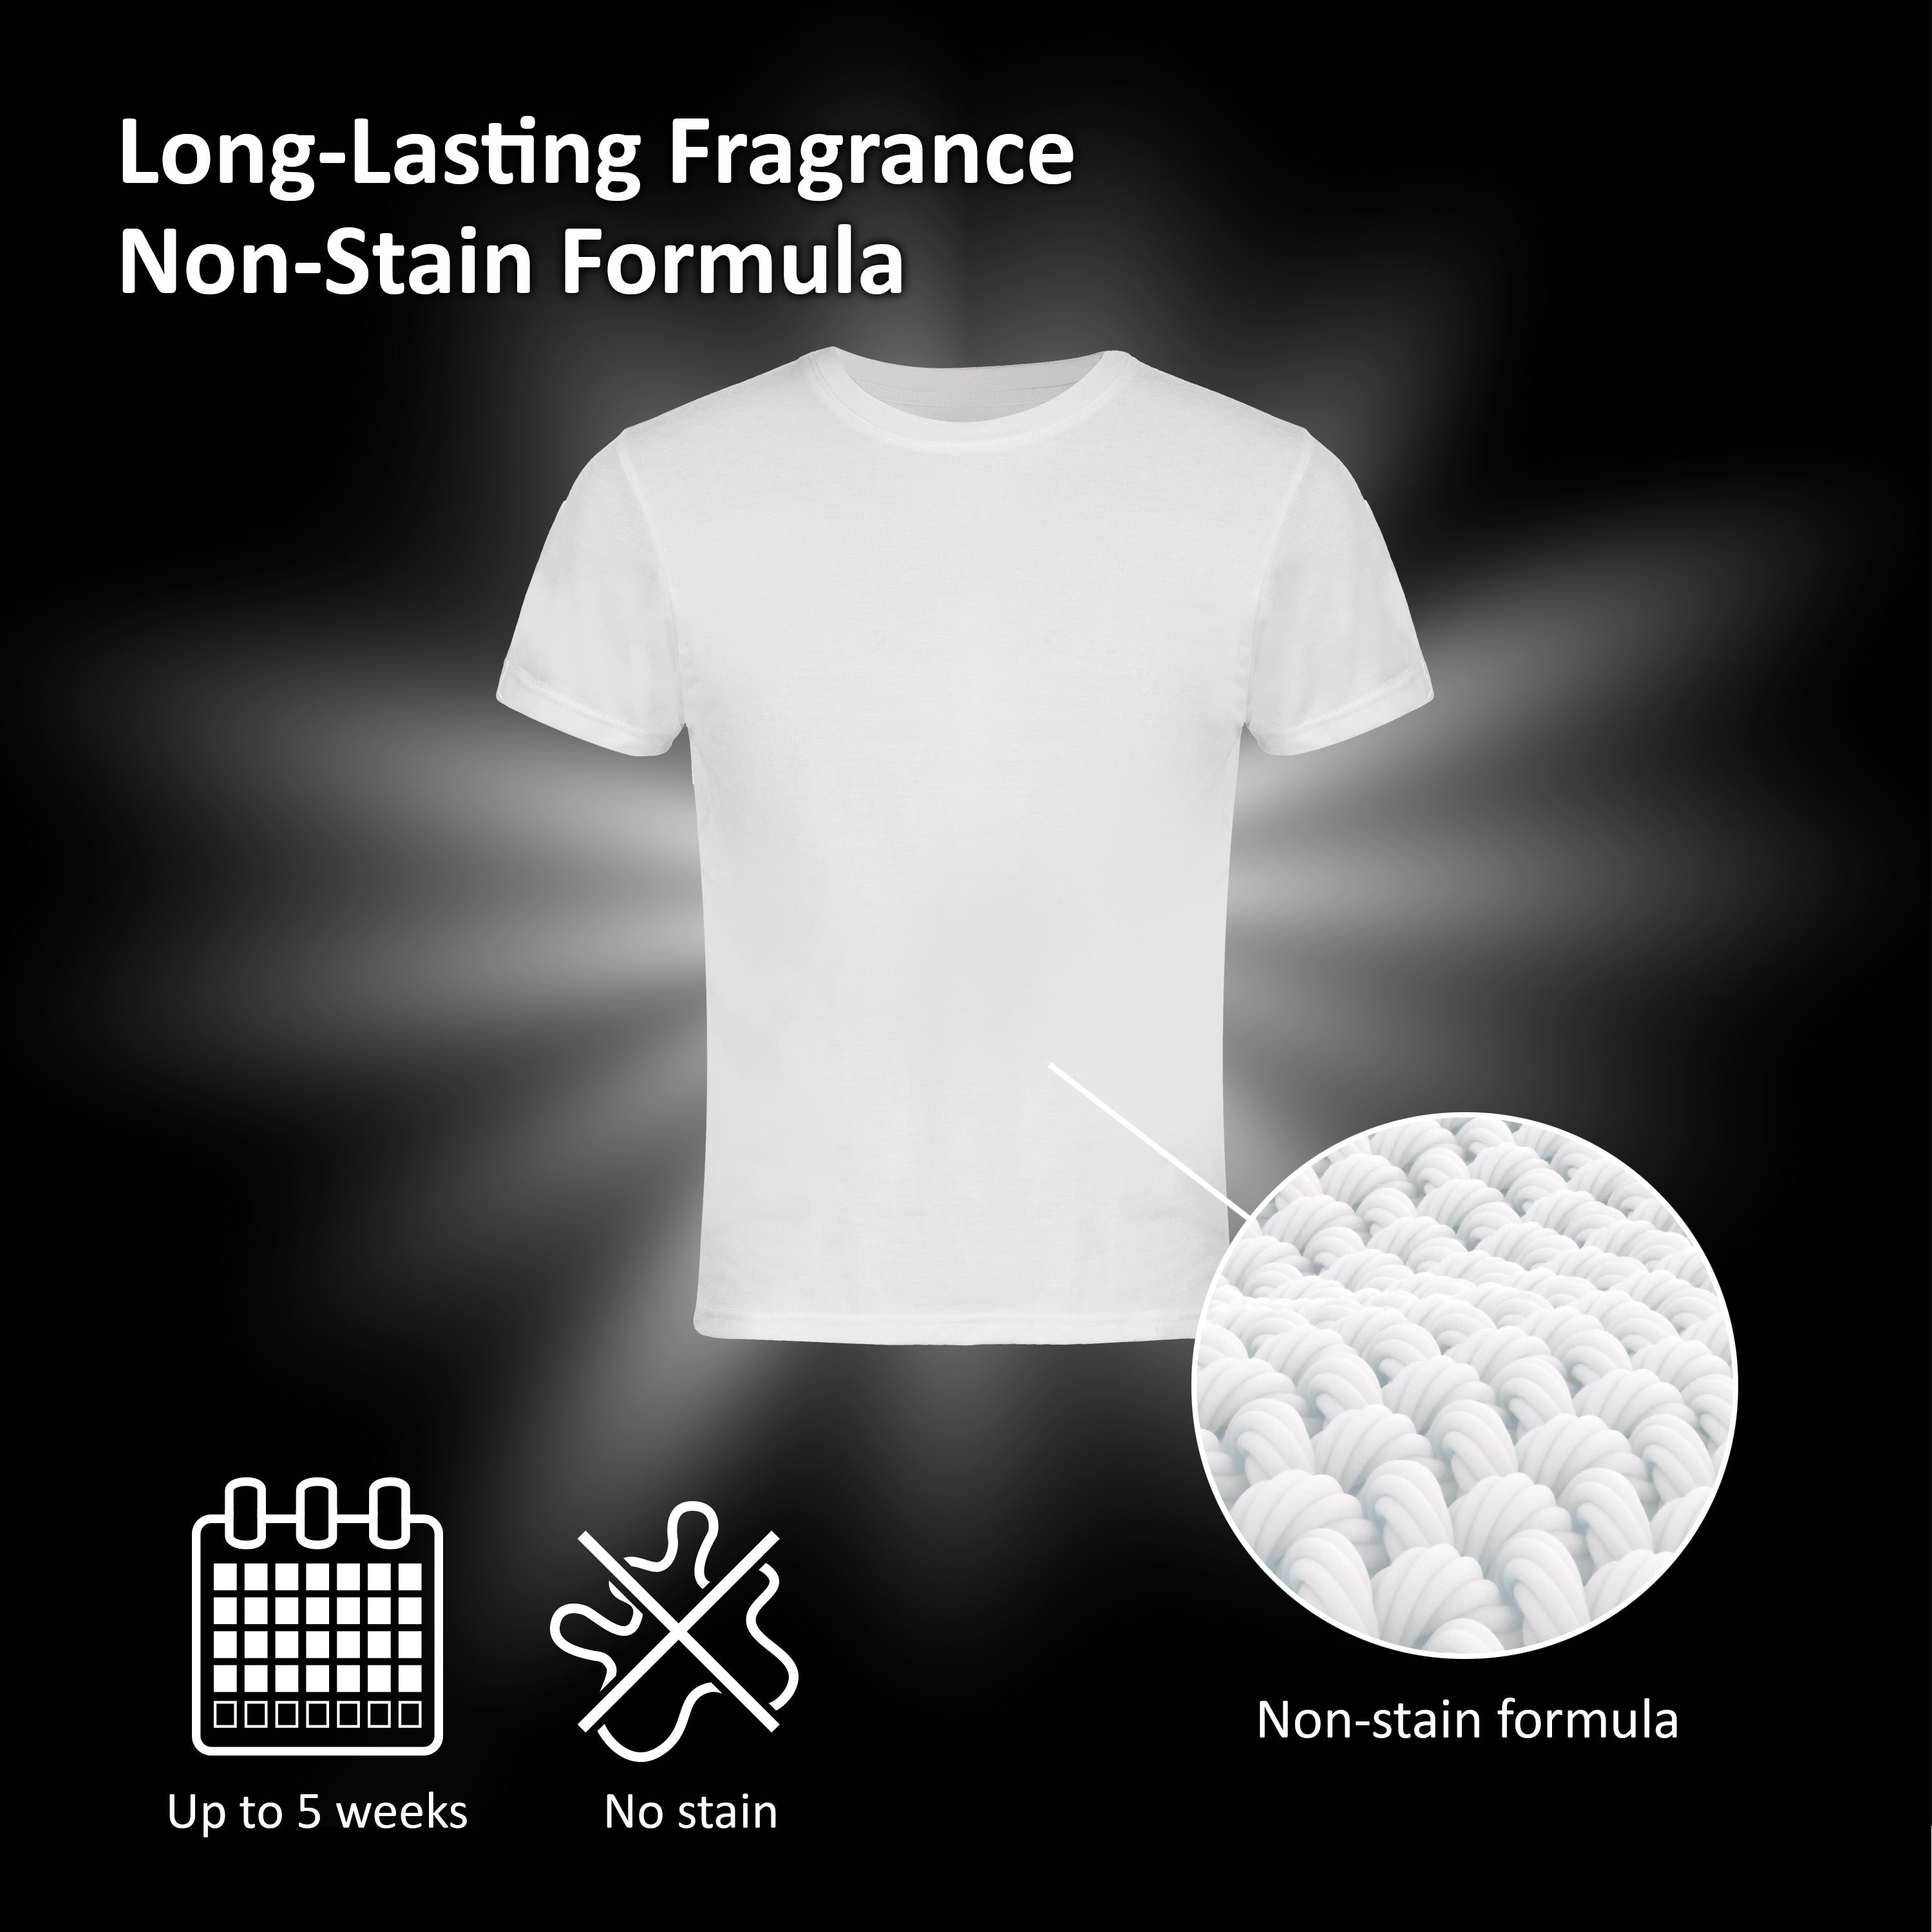 Haier fragrance laundry perfume for washing machine 100ml/400ml